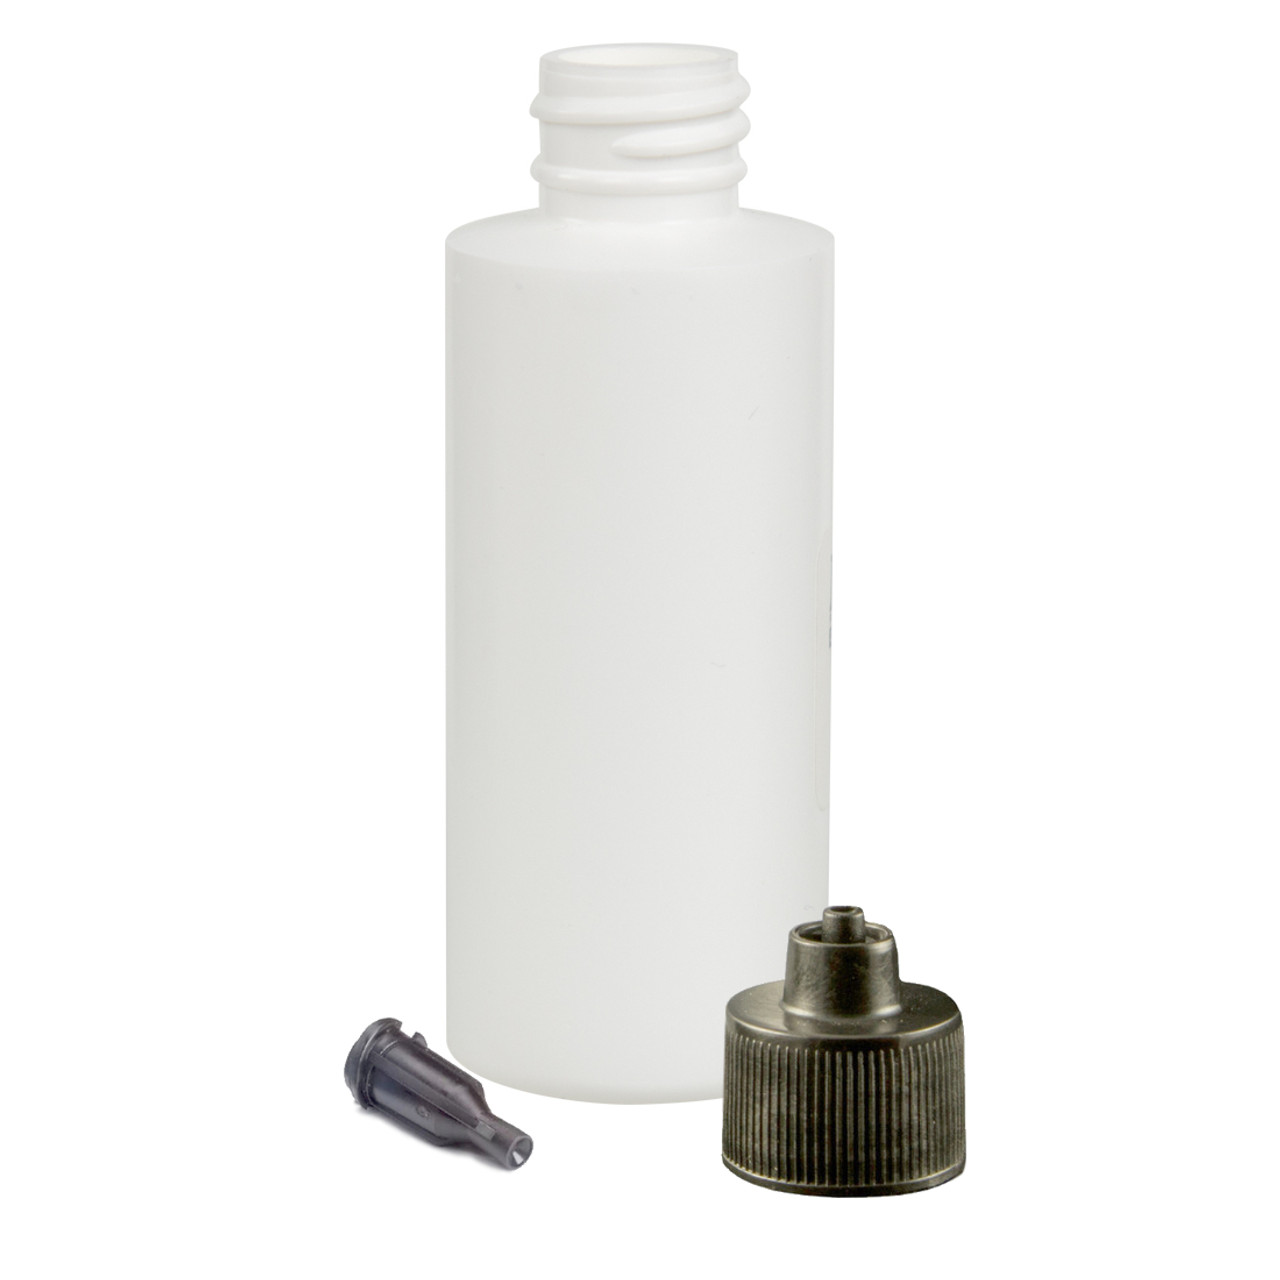 CML Supply 2 oz Squeeze Bottle & Luer Lock Tip Cap Kit Bag of 10